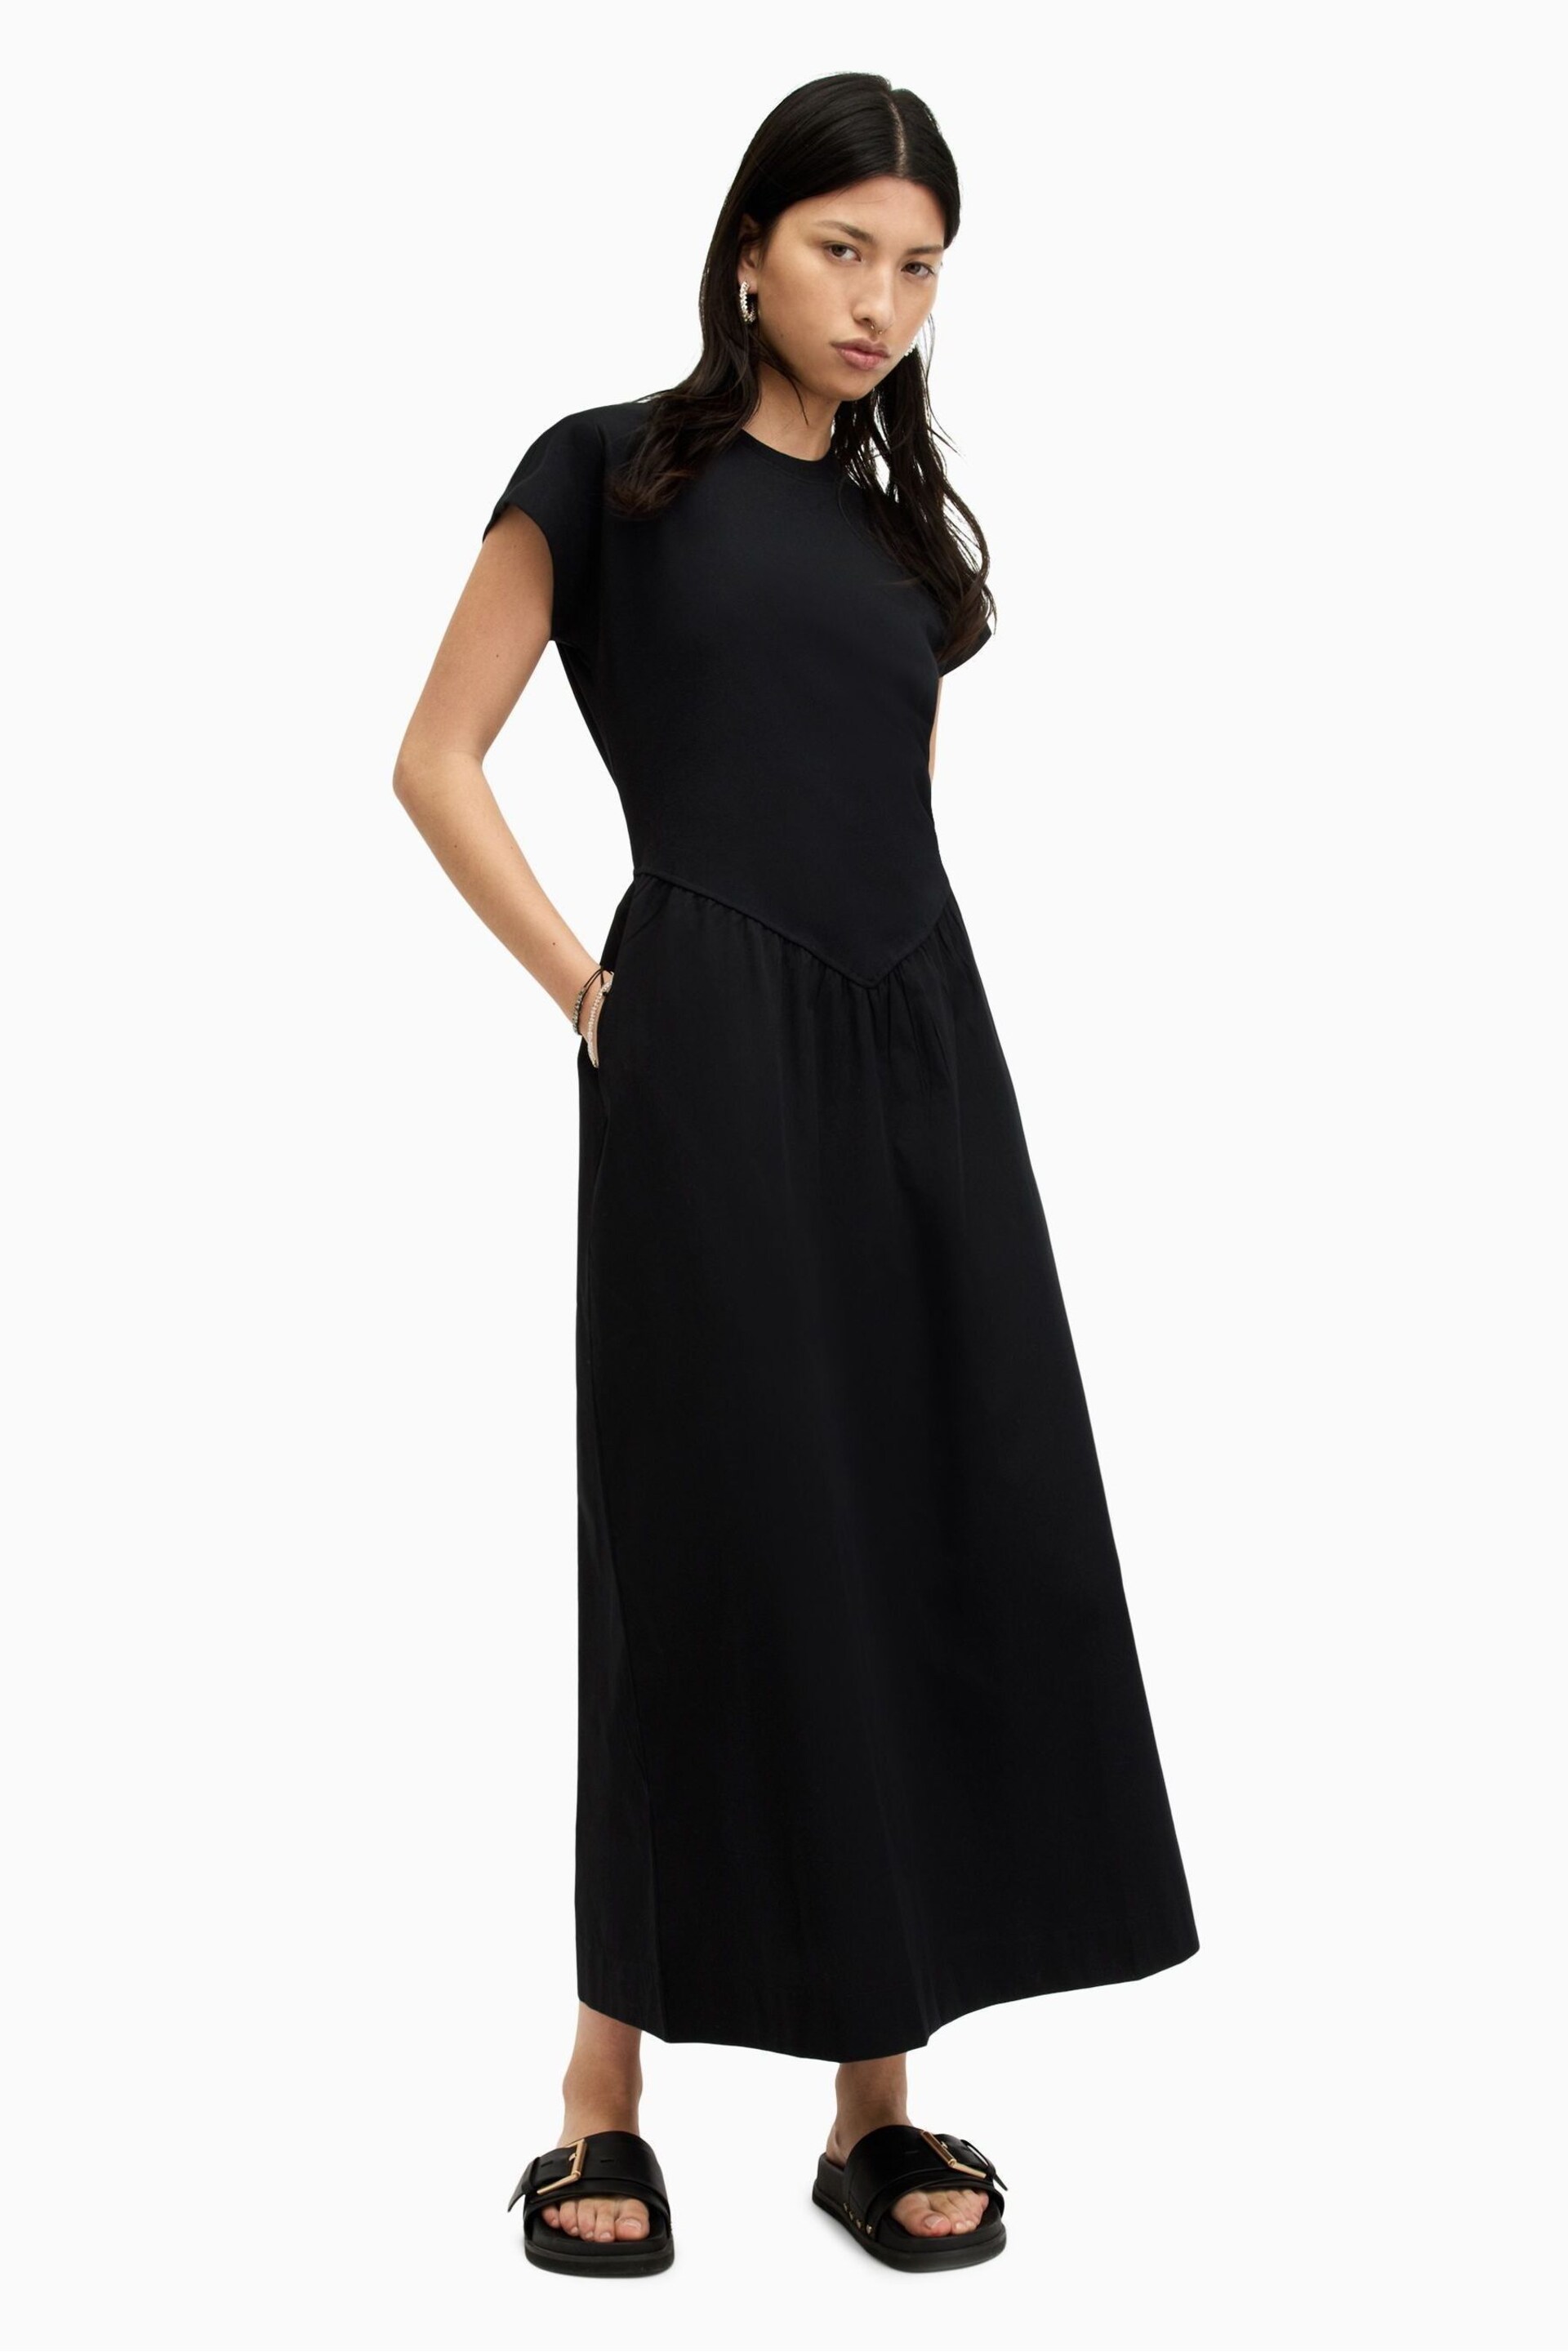 AllSaints Black Frankie Dress - Image 3 of 6